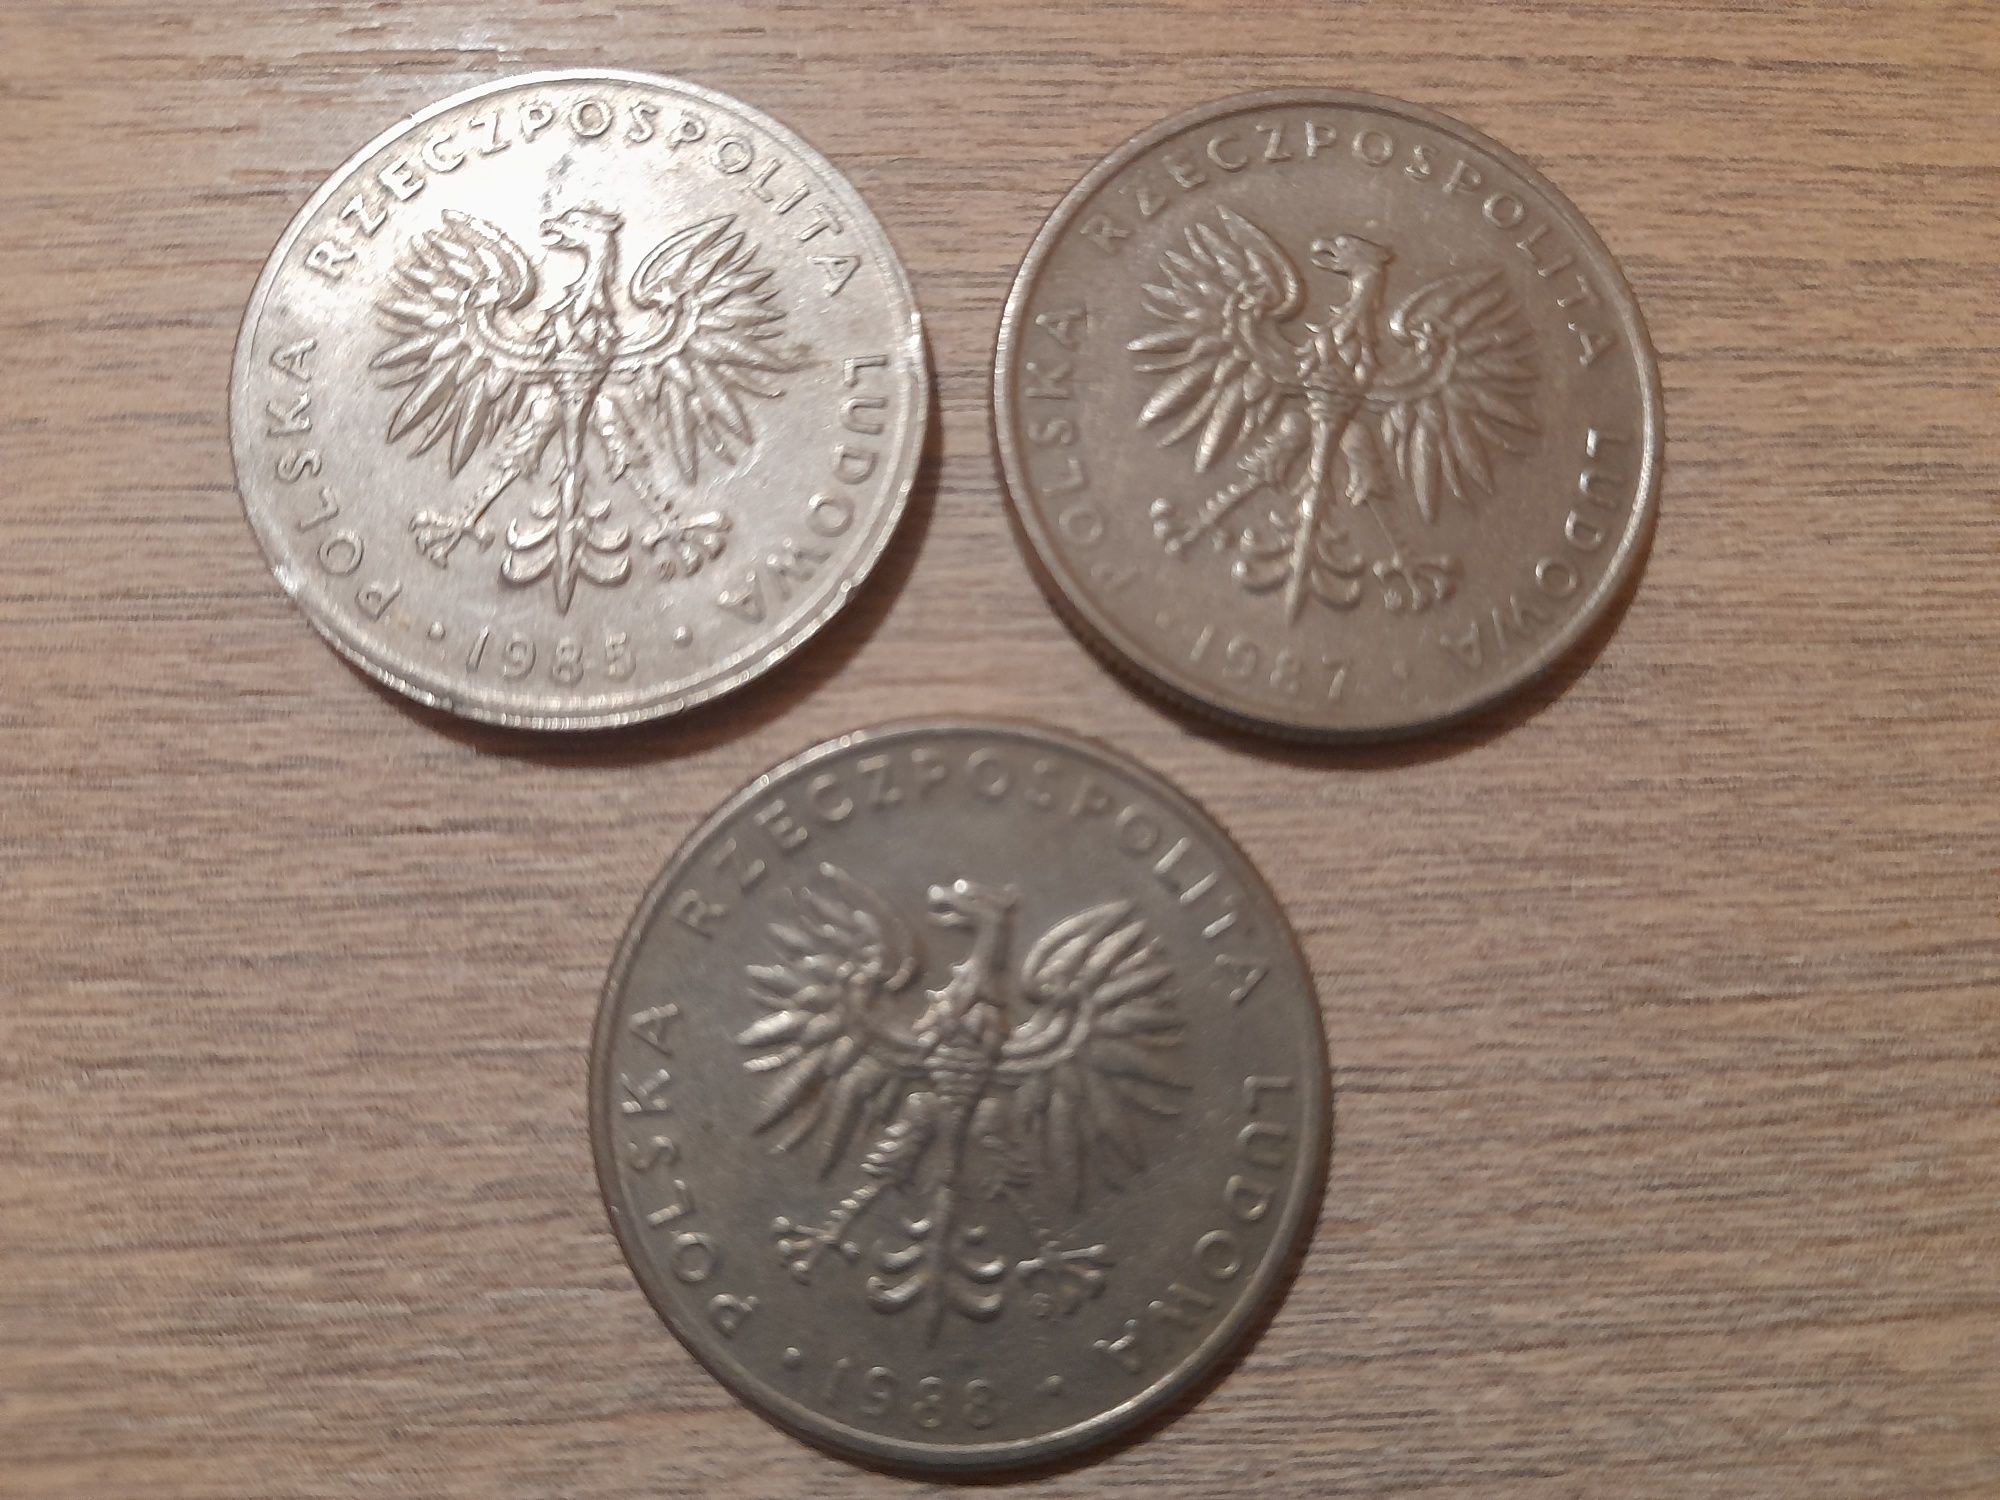 Stare monety z PRL